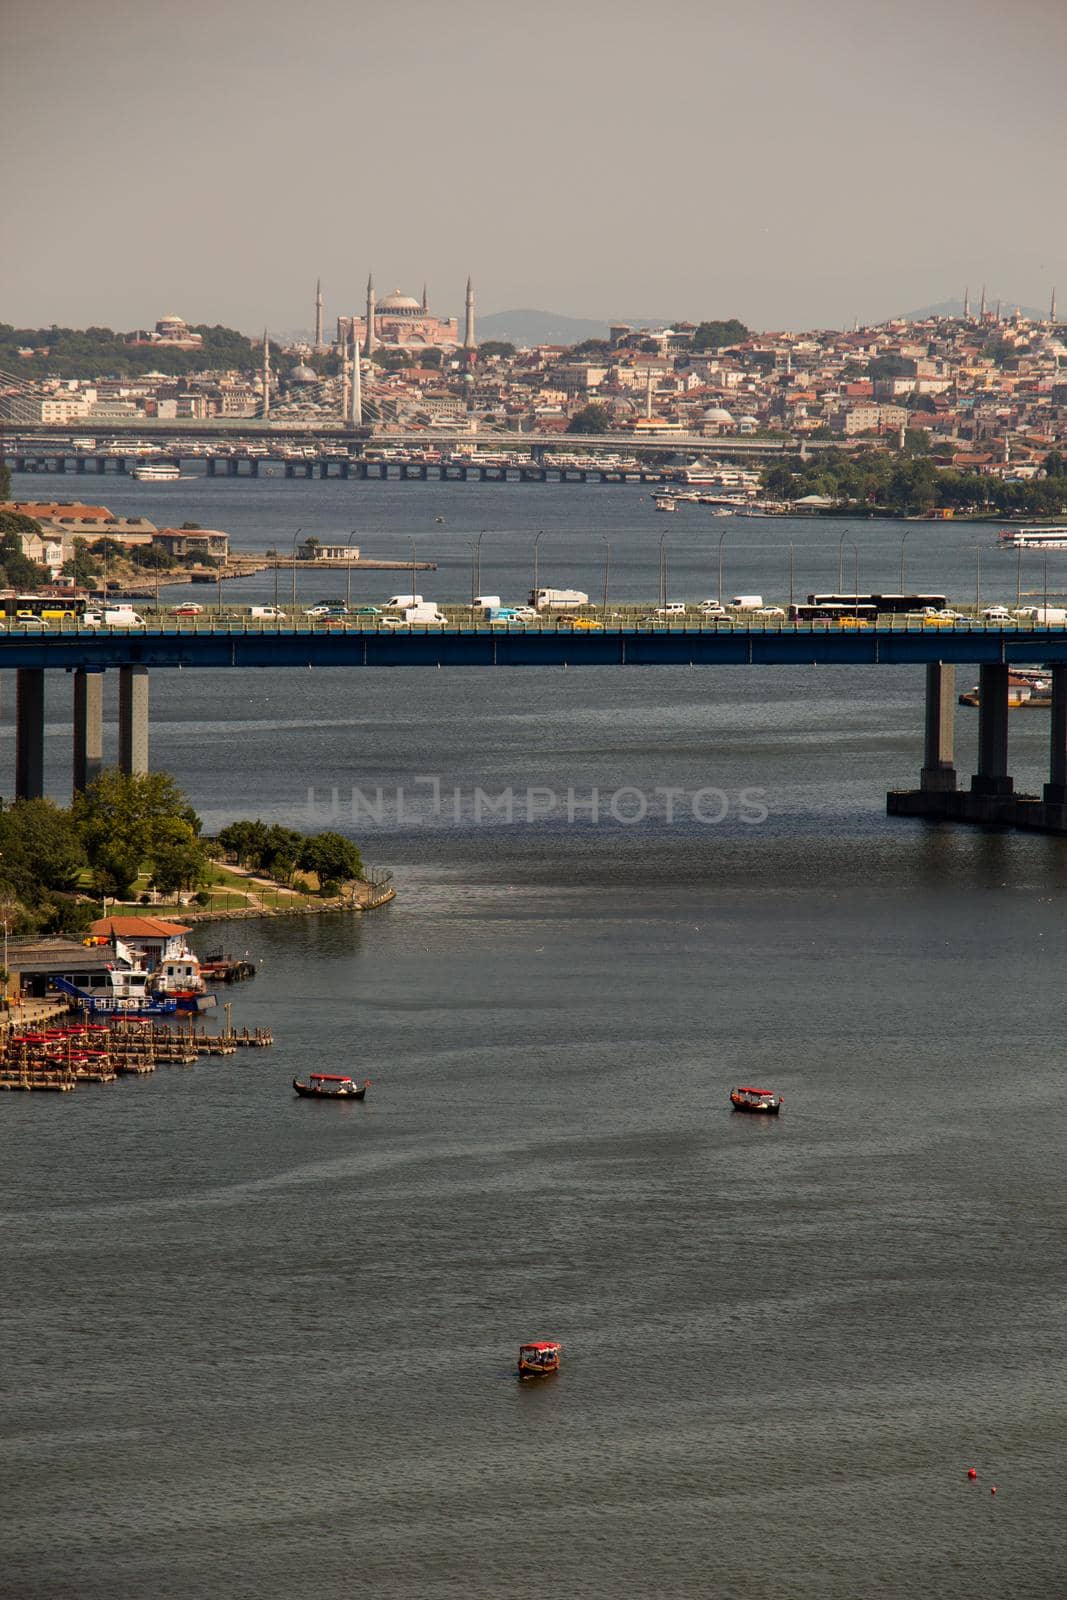 Eyup bridge in Golden horn on display, Istanbul, Turkey by berkay